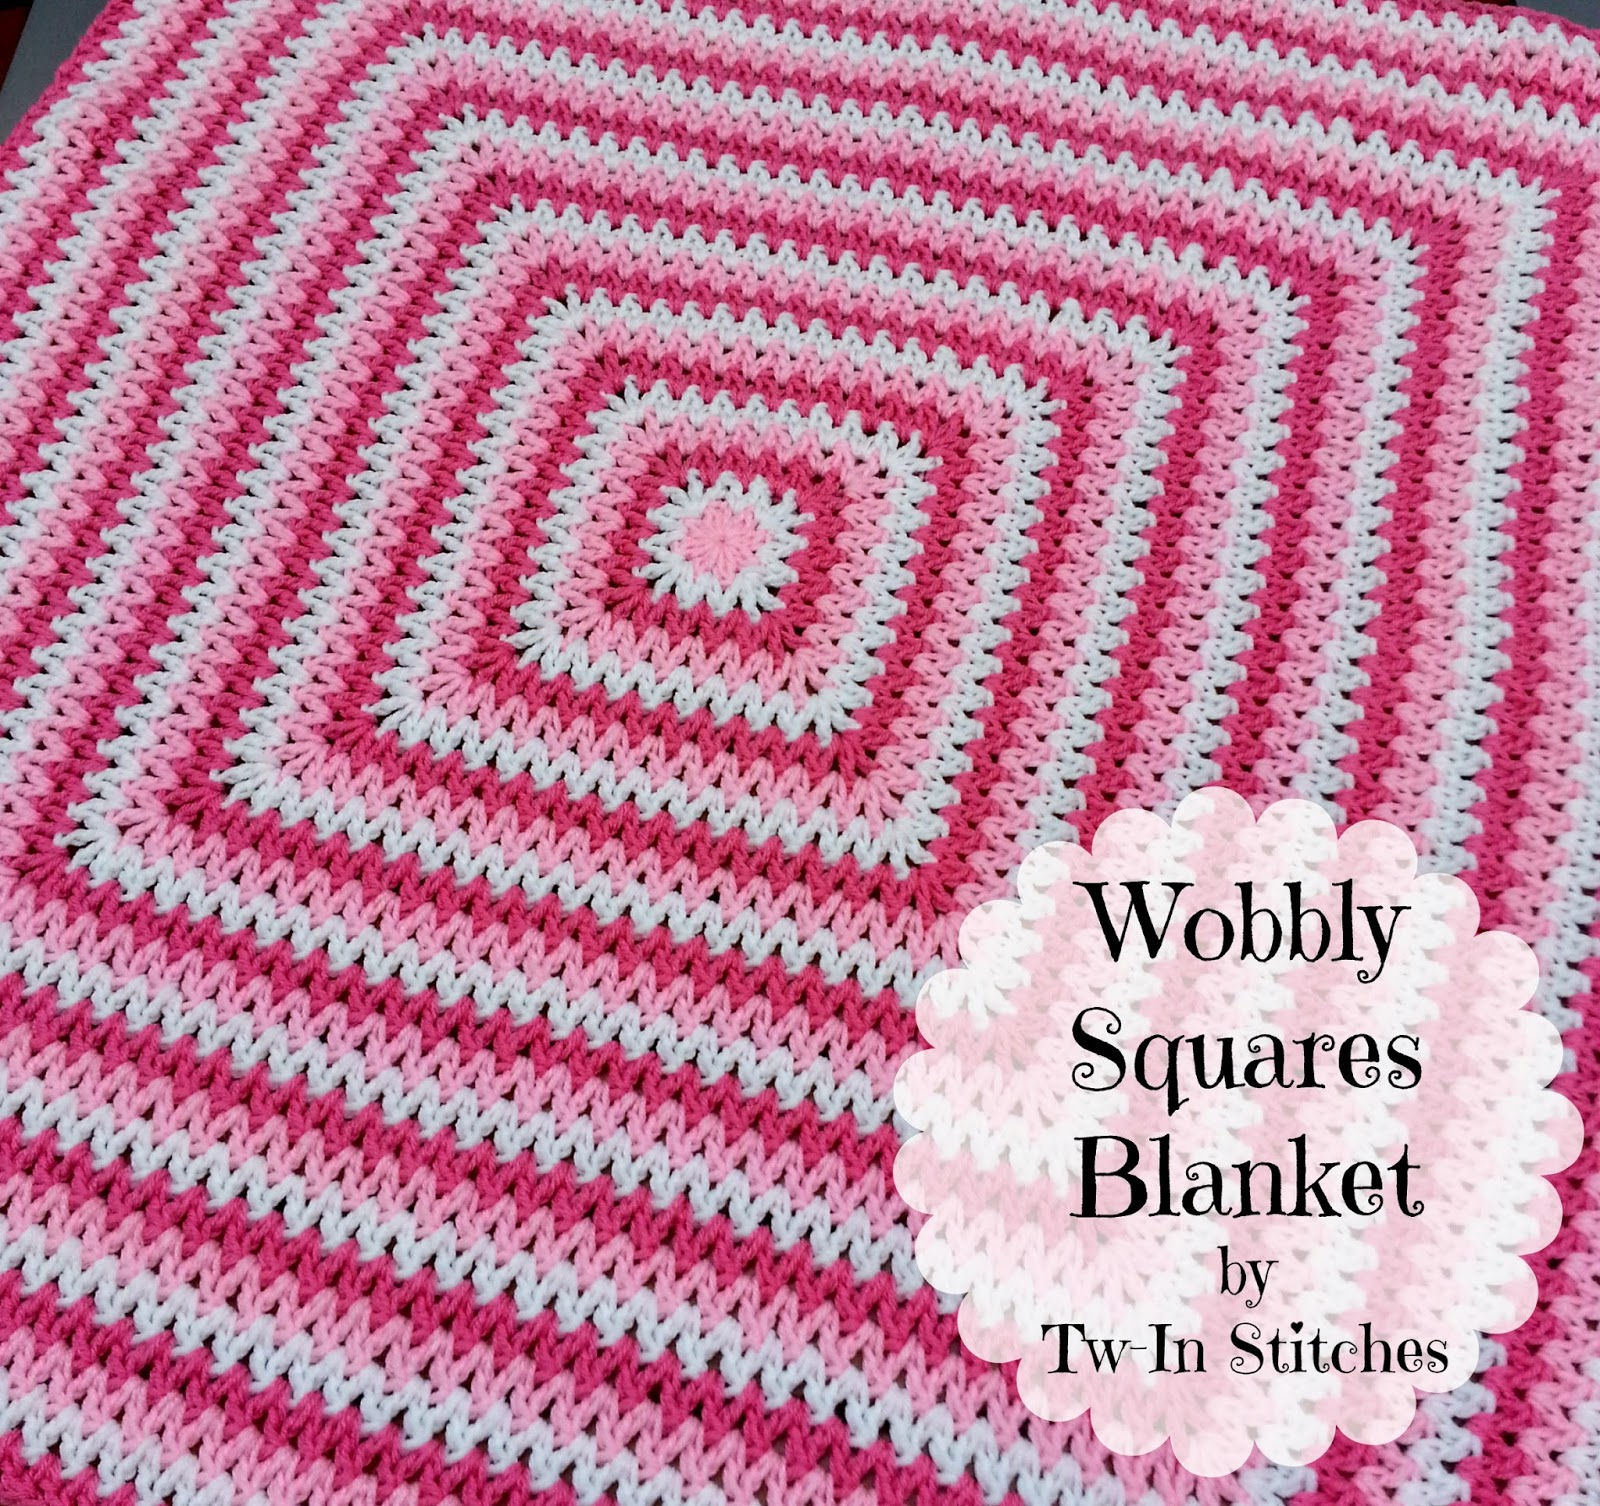 12 Granny Square Crochet Pattern Tw In Stitches Wobbly Squares Blanket Free Pattern Tw In Stitches